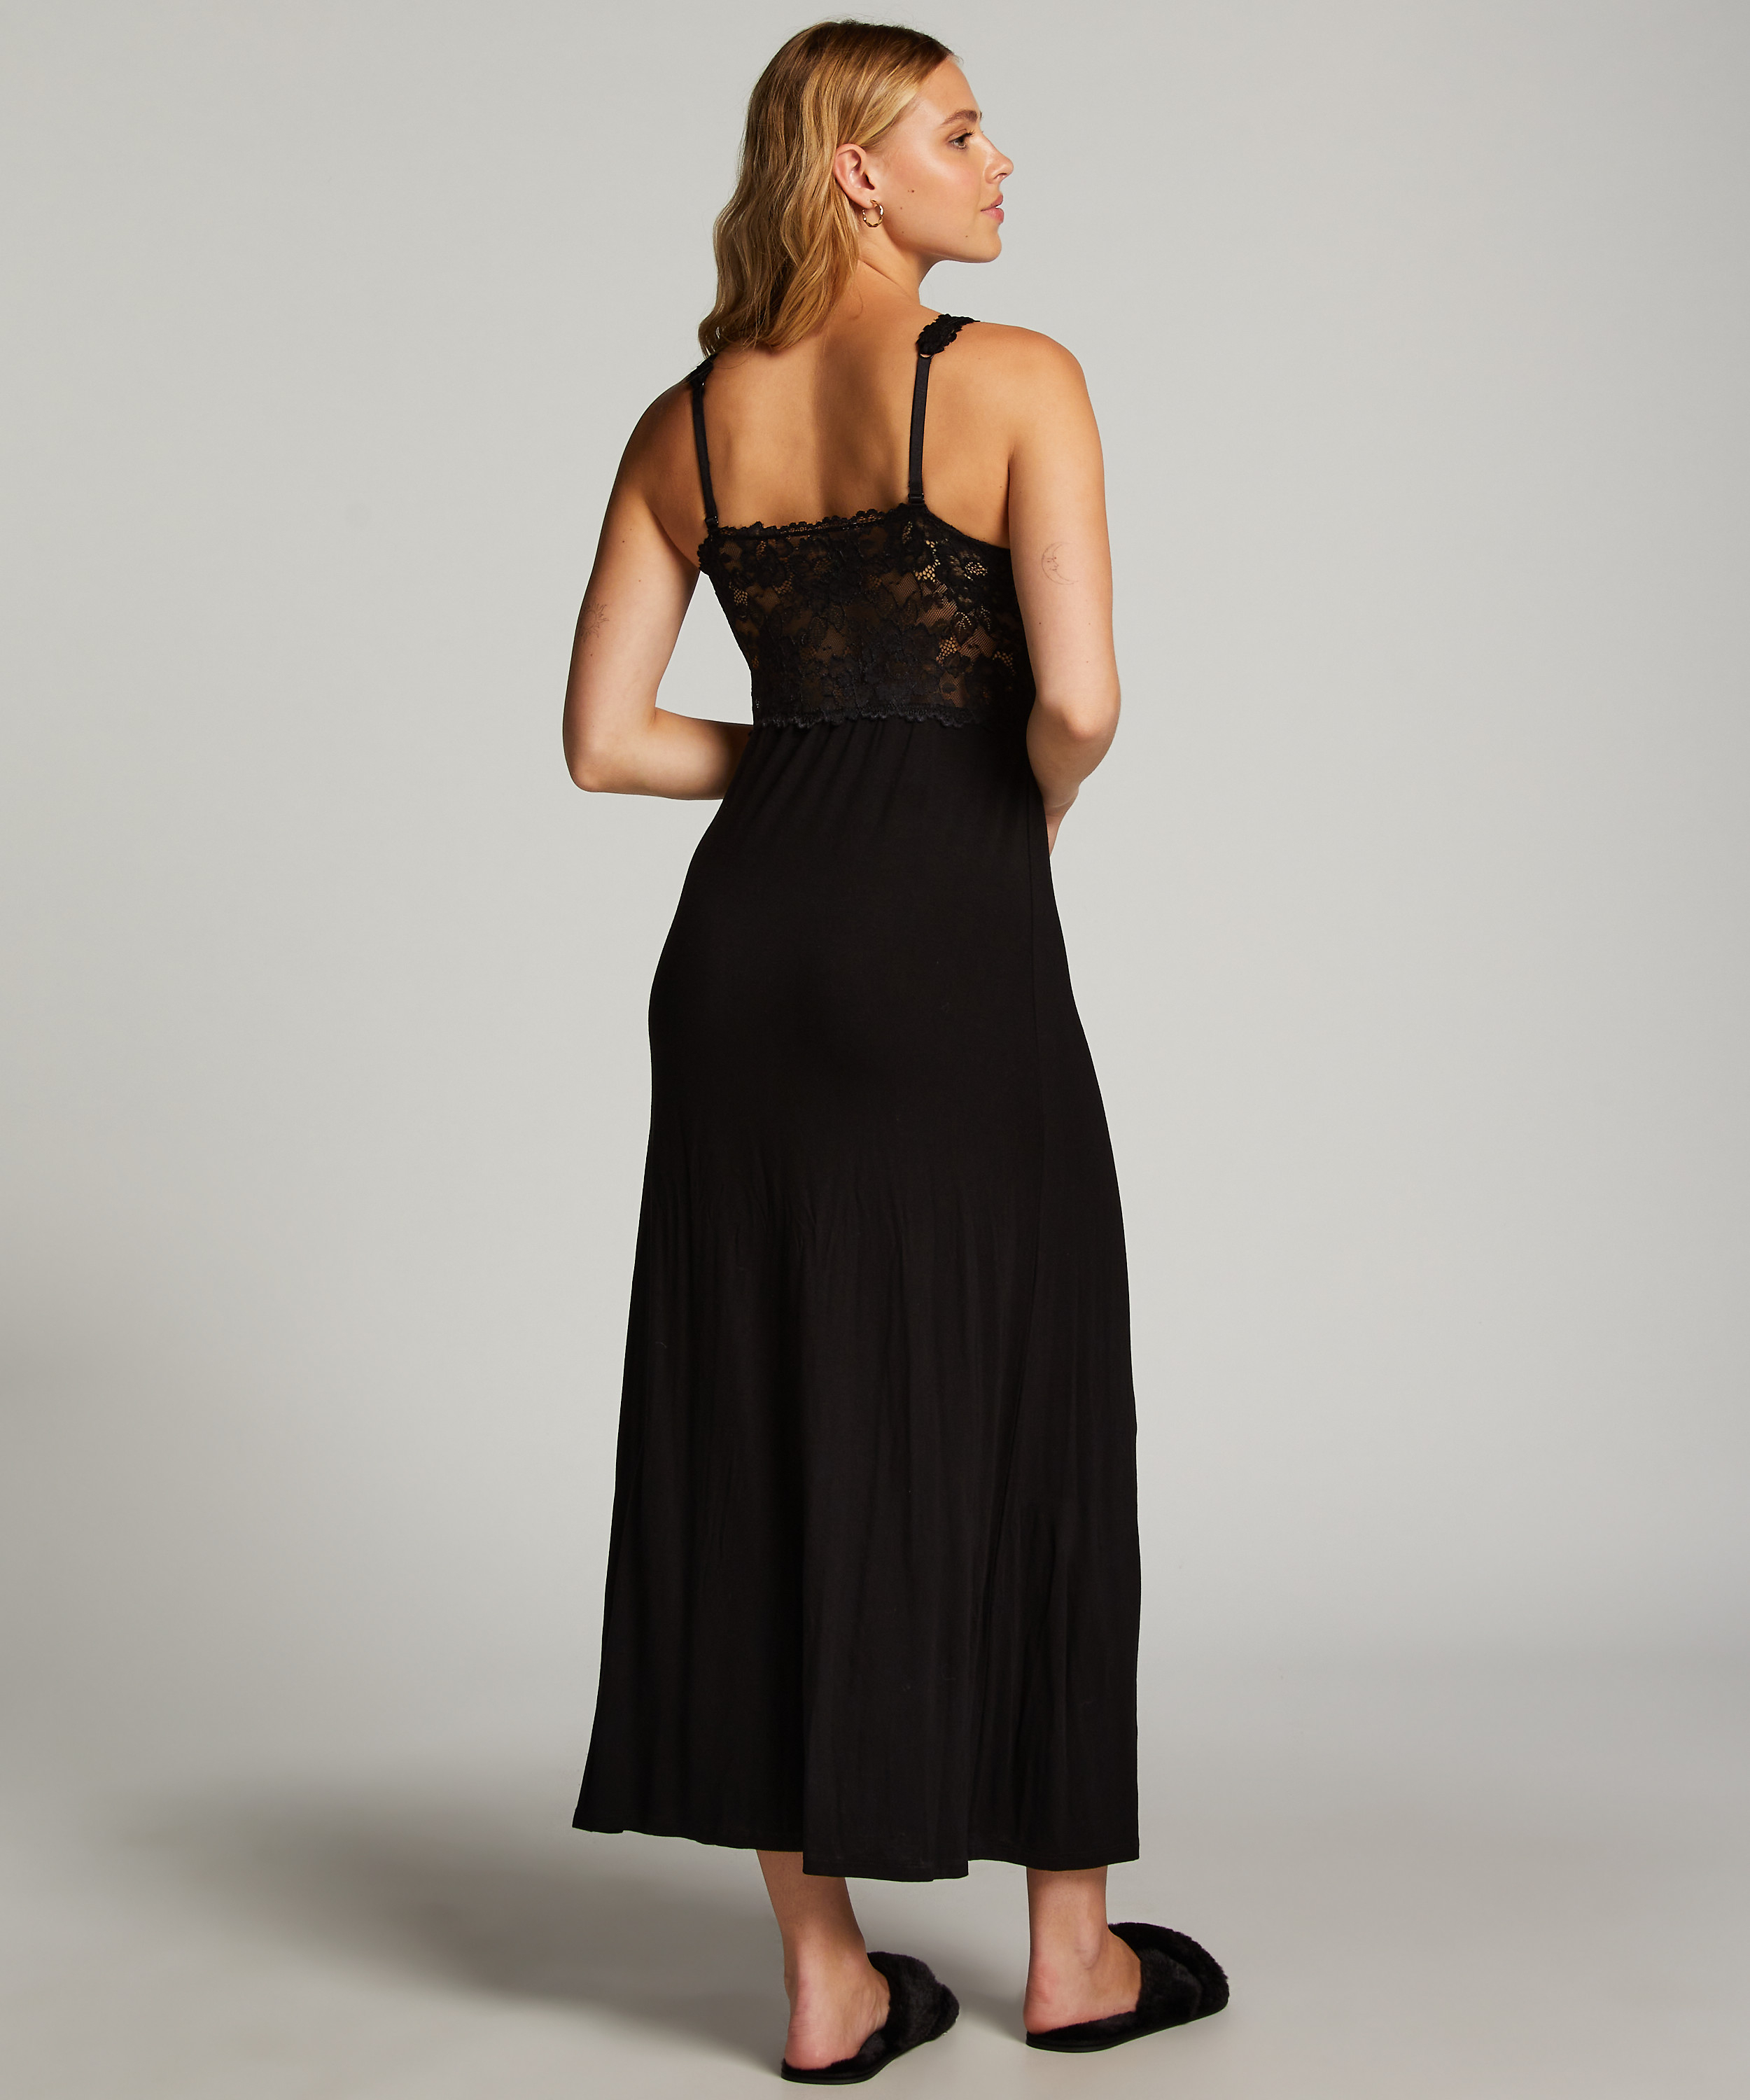 Nora Lace Long Slip Dress, Black, main